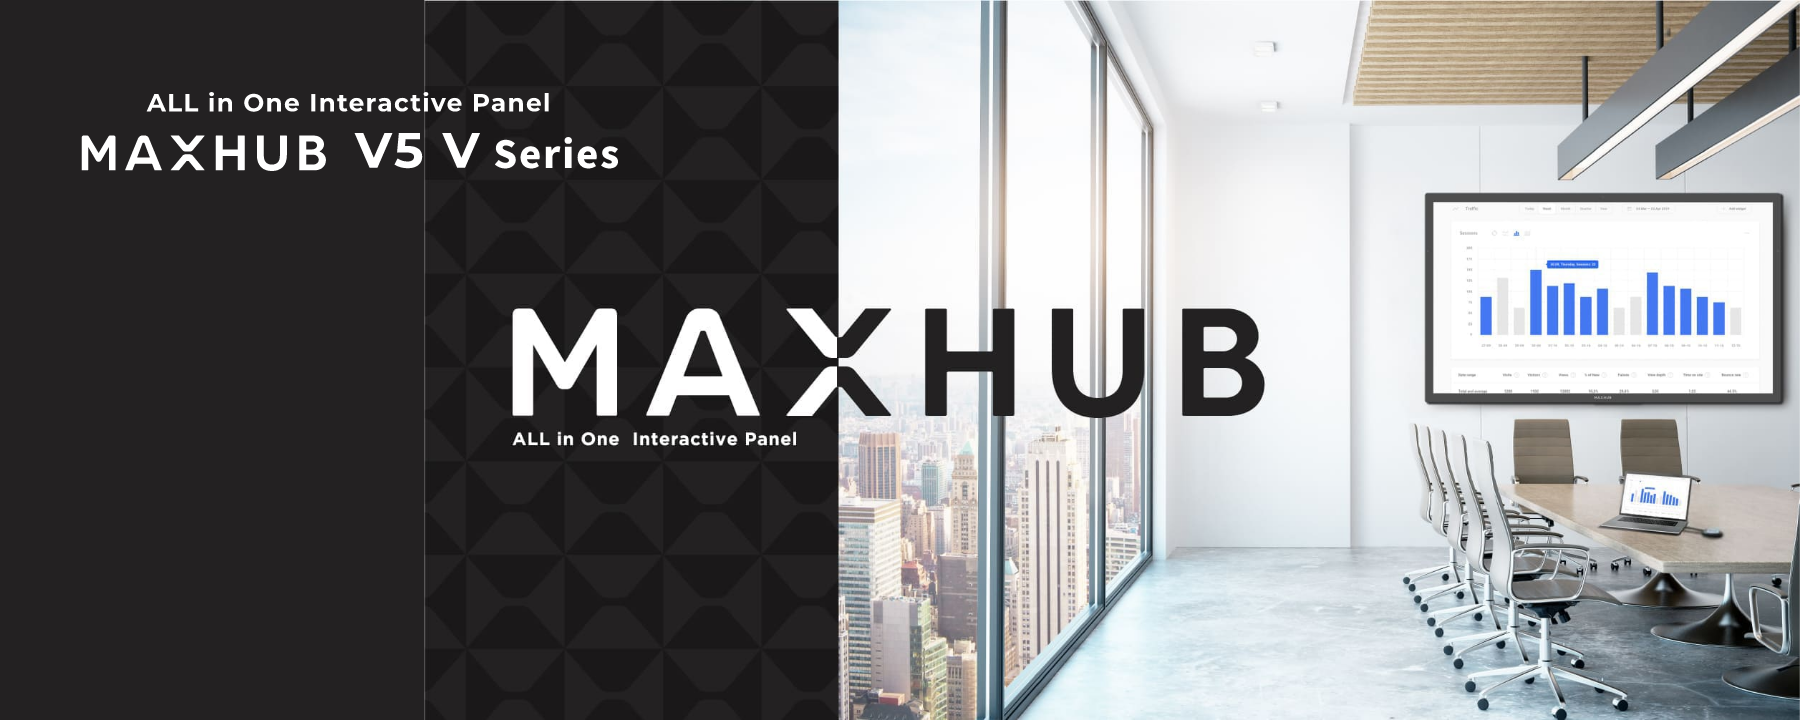 MAXHUB V5 V Series MAYA